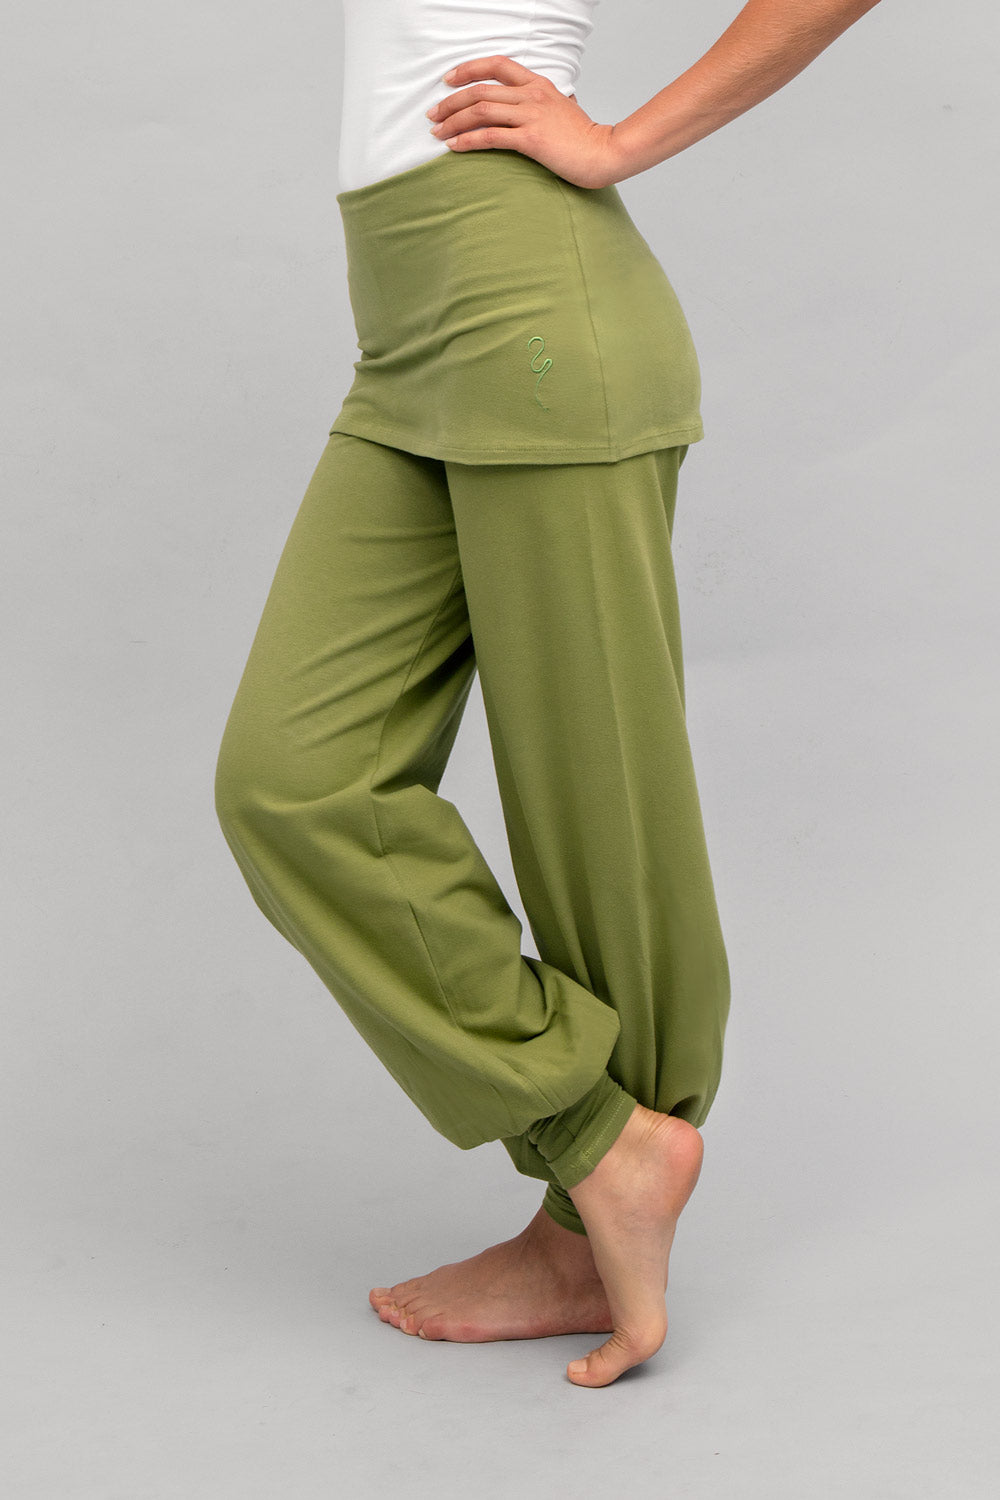 Moss green Sohang pants